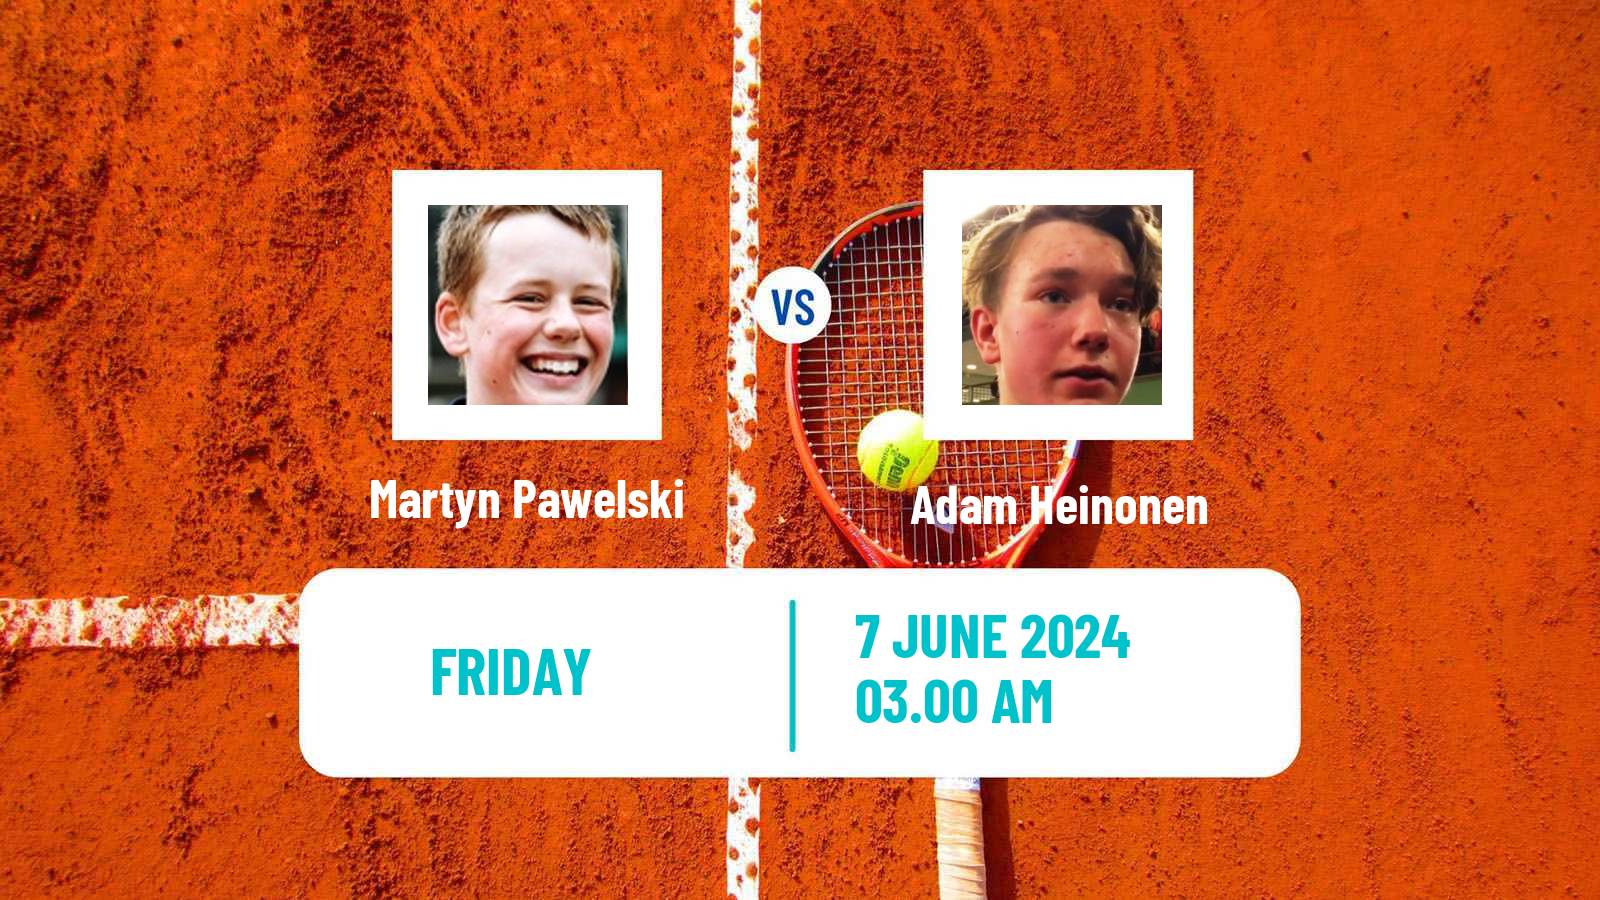 Tennis ITF M25 Kursumlijska Banja 2 Men Martyn Pawelski - Adam Heinonen